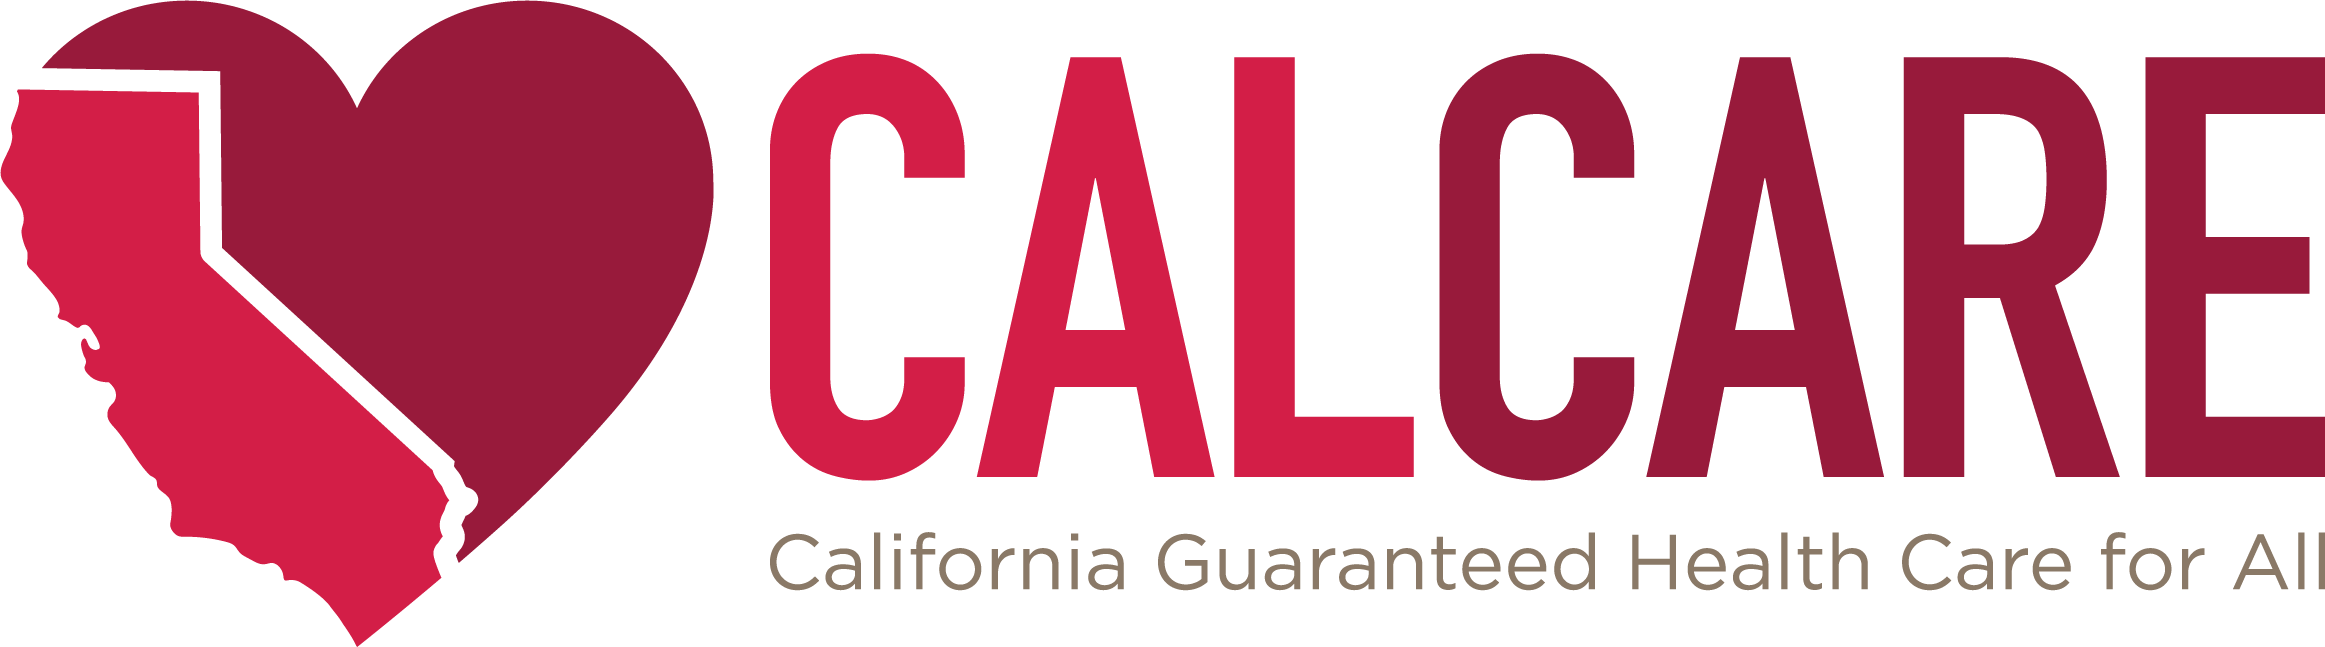 CalCare: California Guaranteed Health Care for All